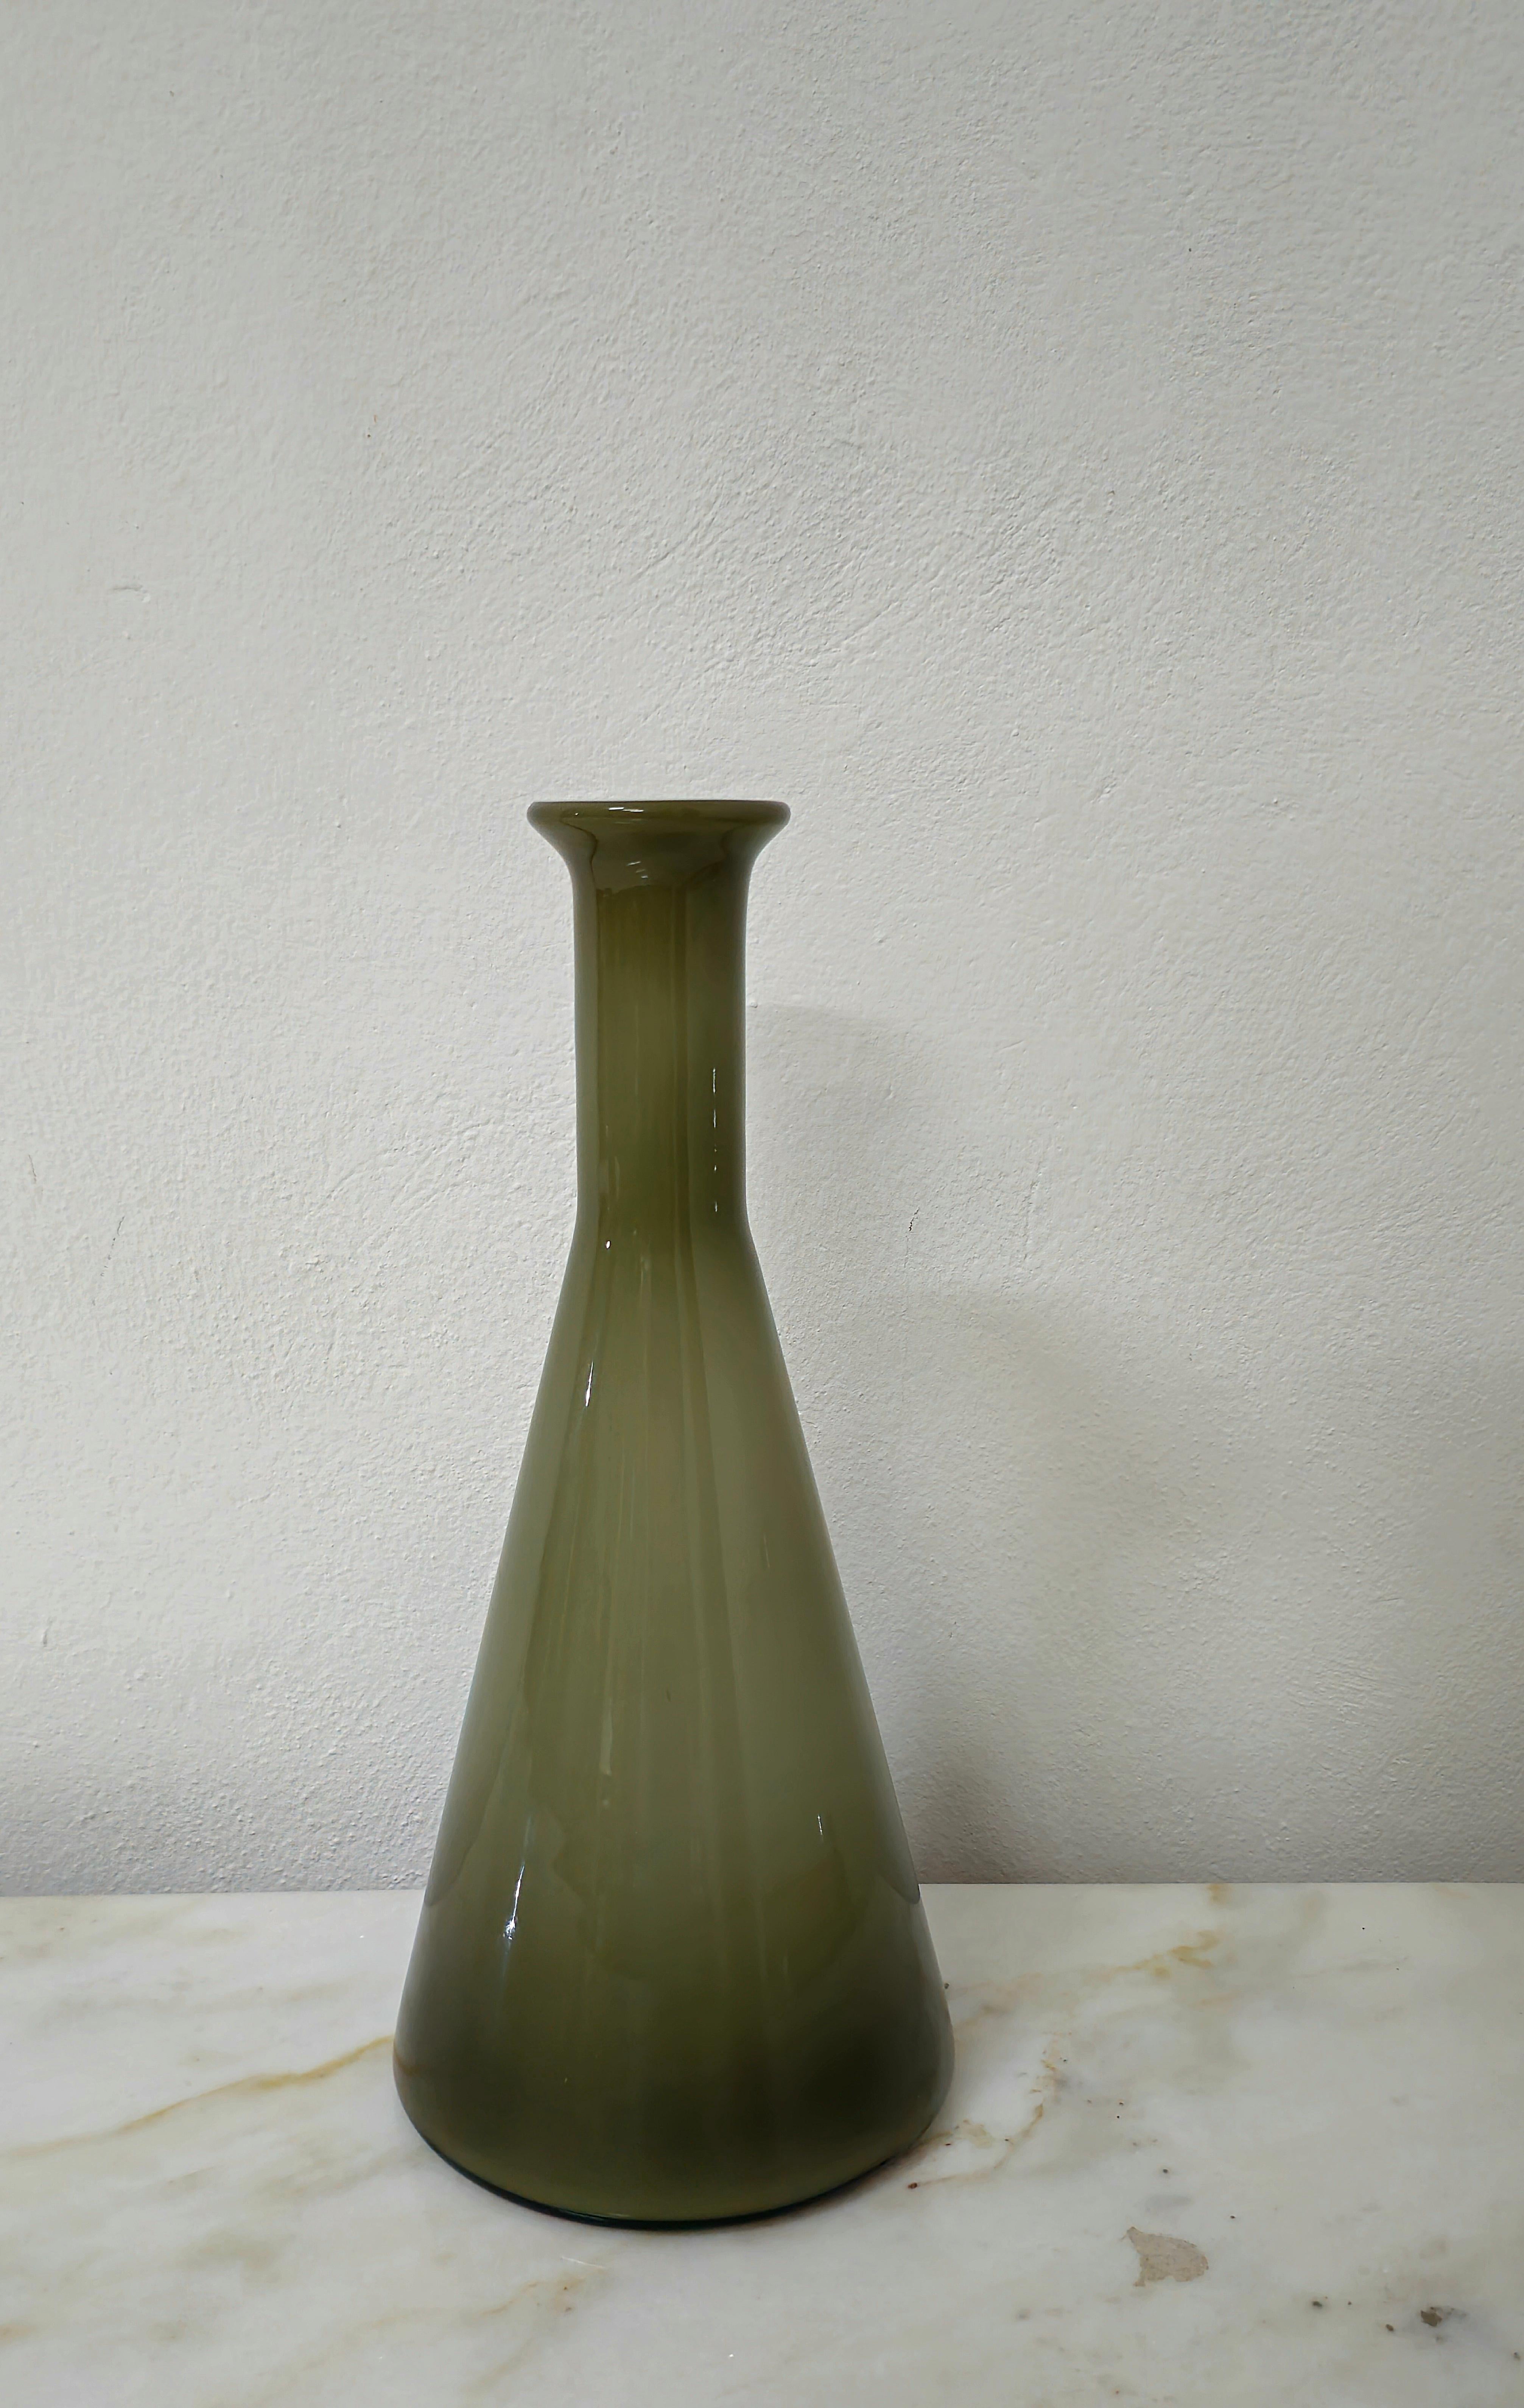 20th Century Vase Decorative Object Murano Glass Green Midcentury Modern Italian Design 1960s For Sale